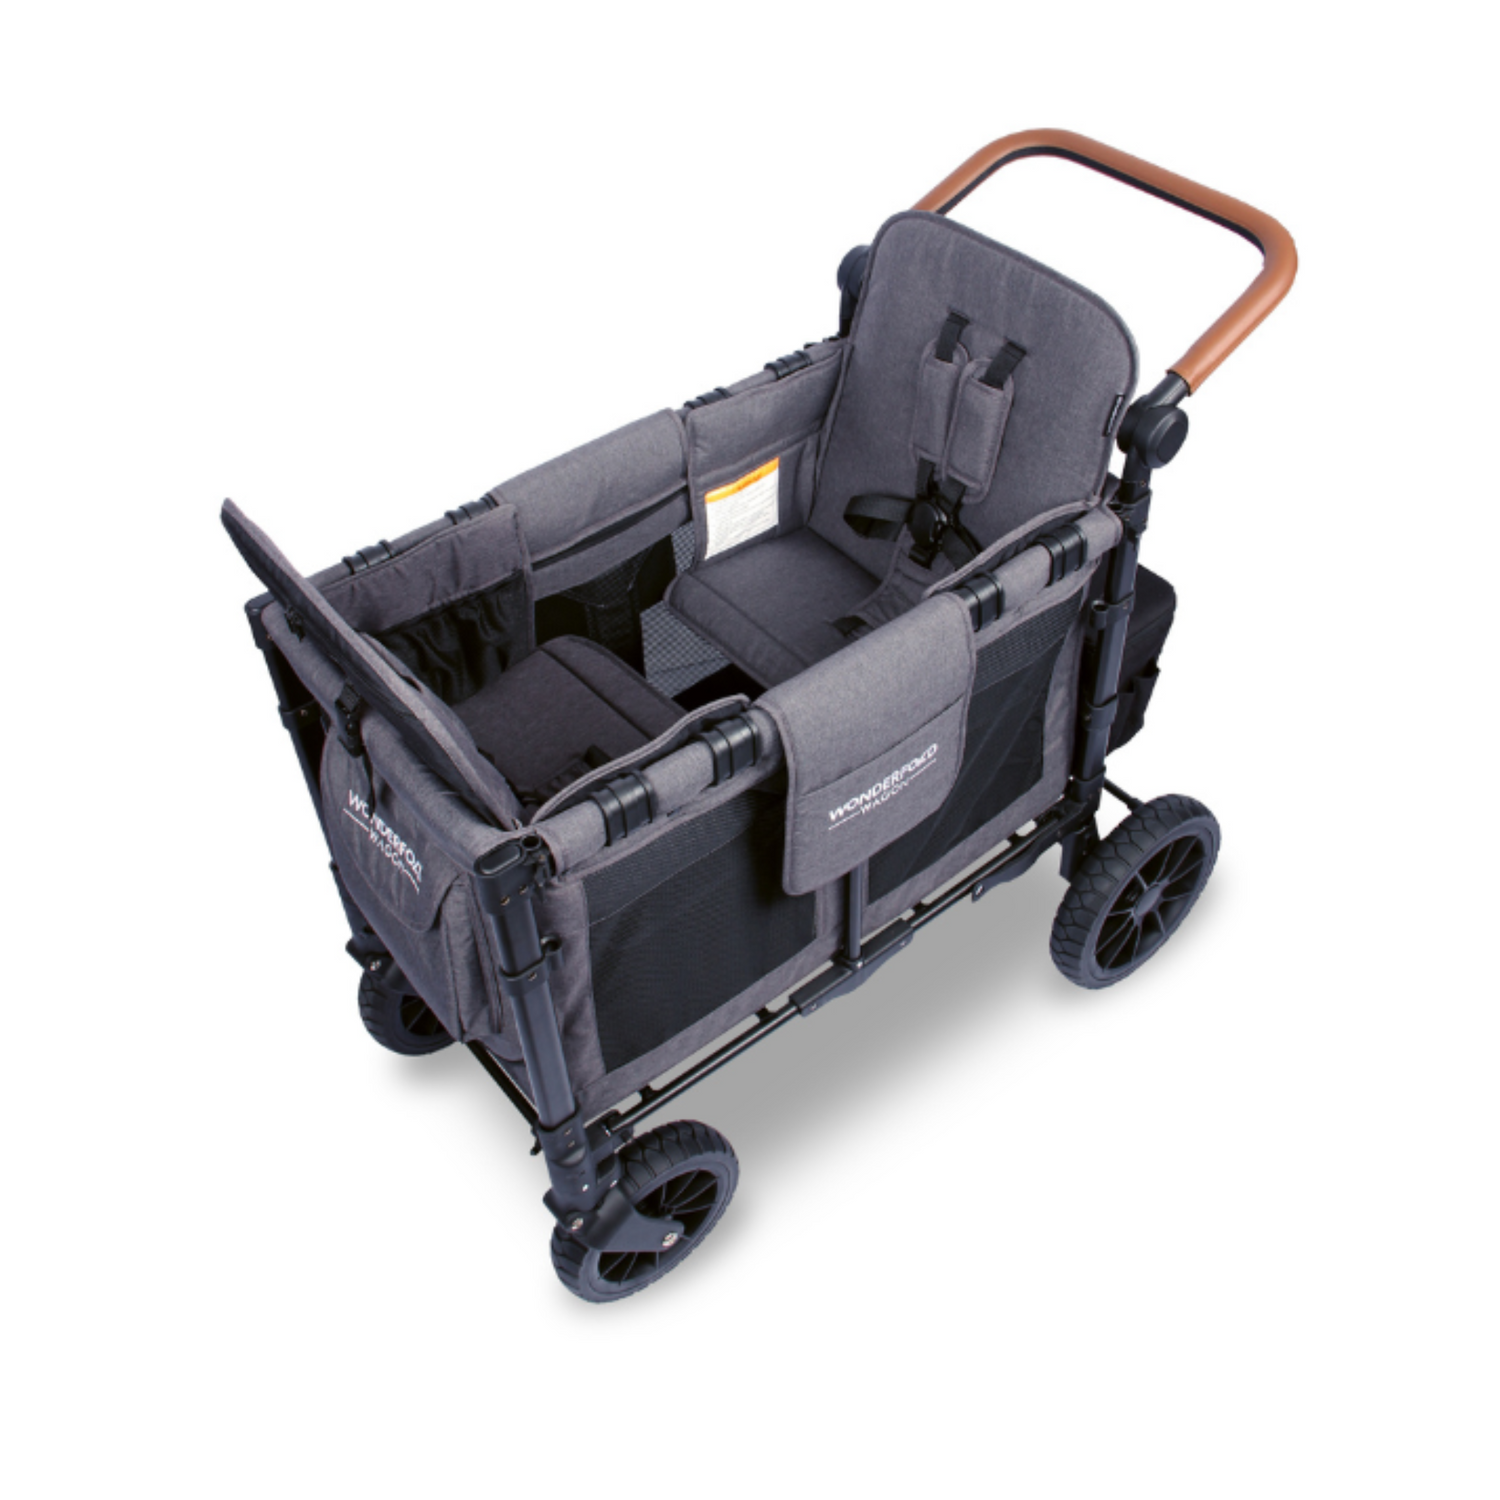 W2 Luxe Stroller Wagon - Charcoal Grey - WonderFold Wagons Australia